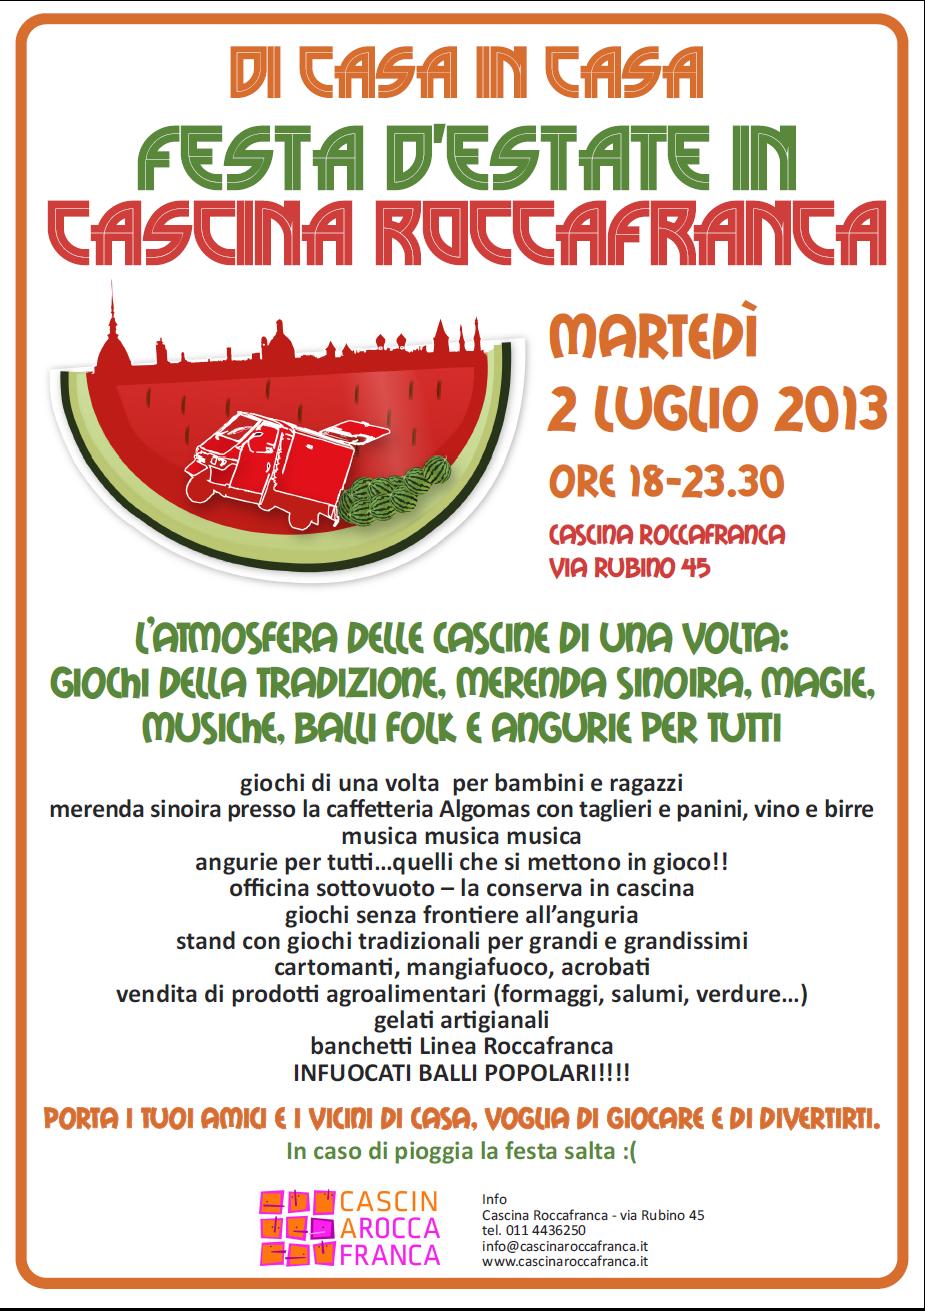 Martedì 2 luglio Festa d’Estate in Cascina Roccafranca